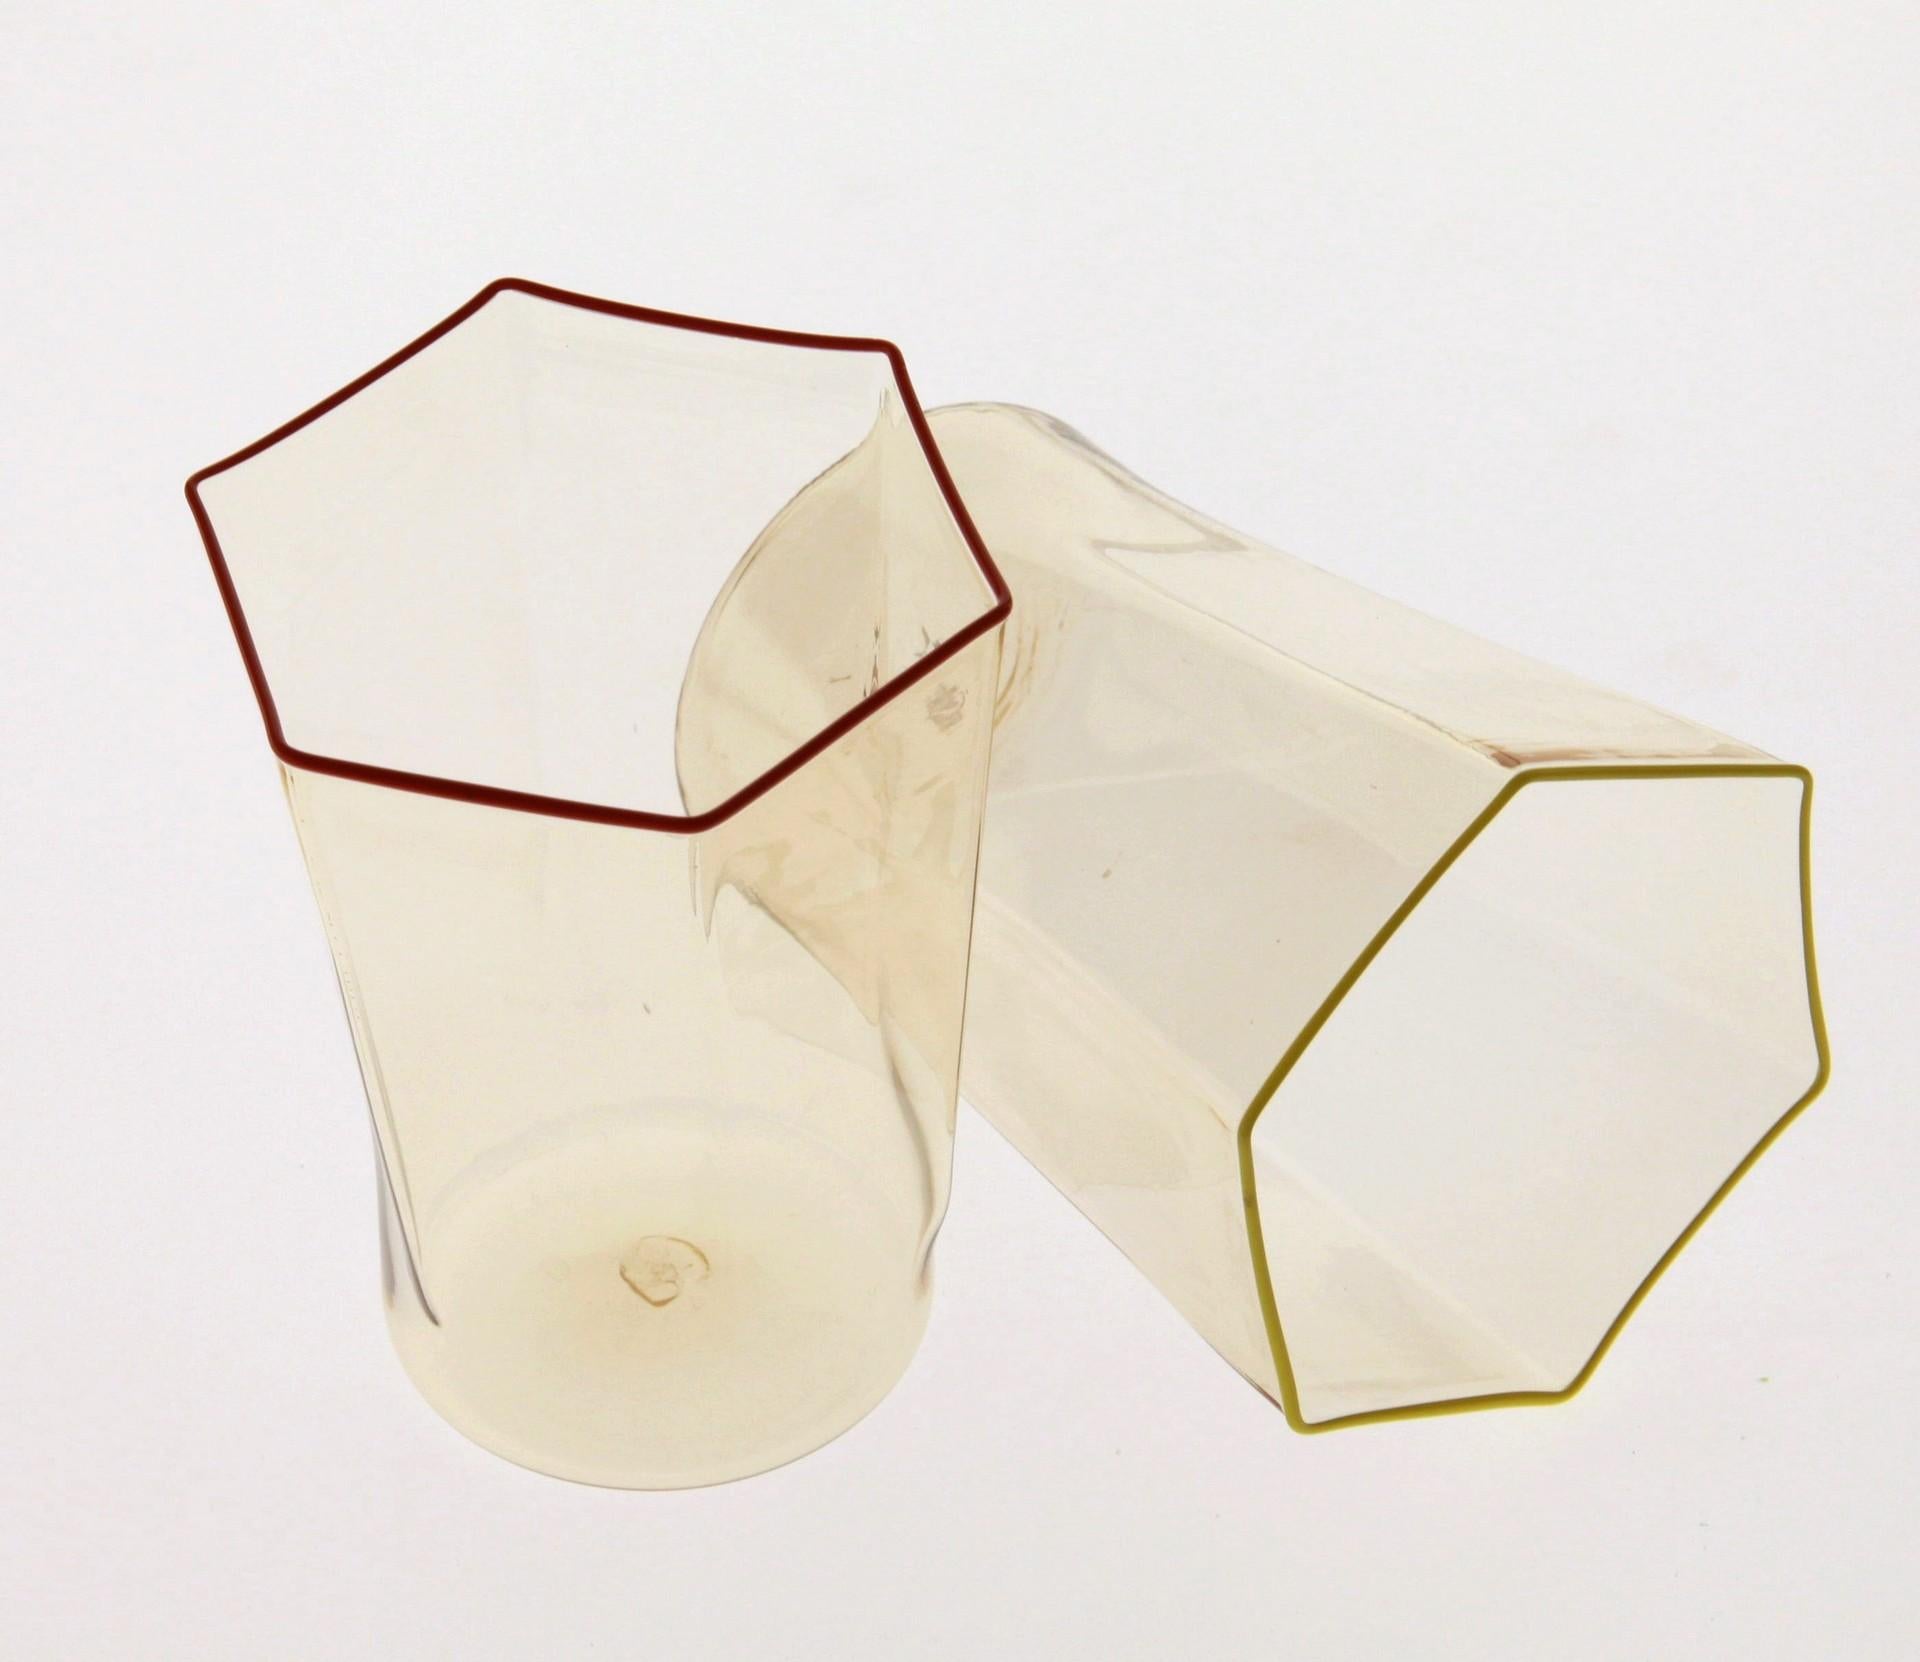 Six Hexagonal Pagliesco Glasses, Assorted Color Rim, Carlo Scarpa, 1932 Design 8